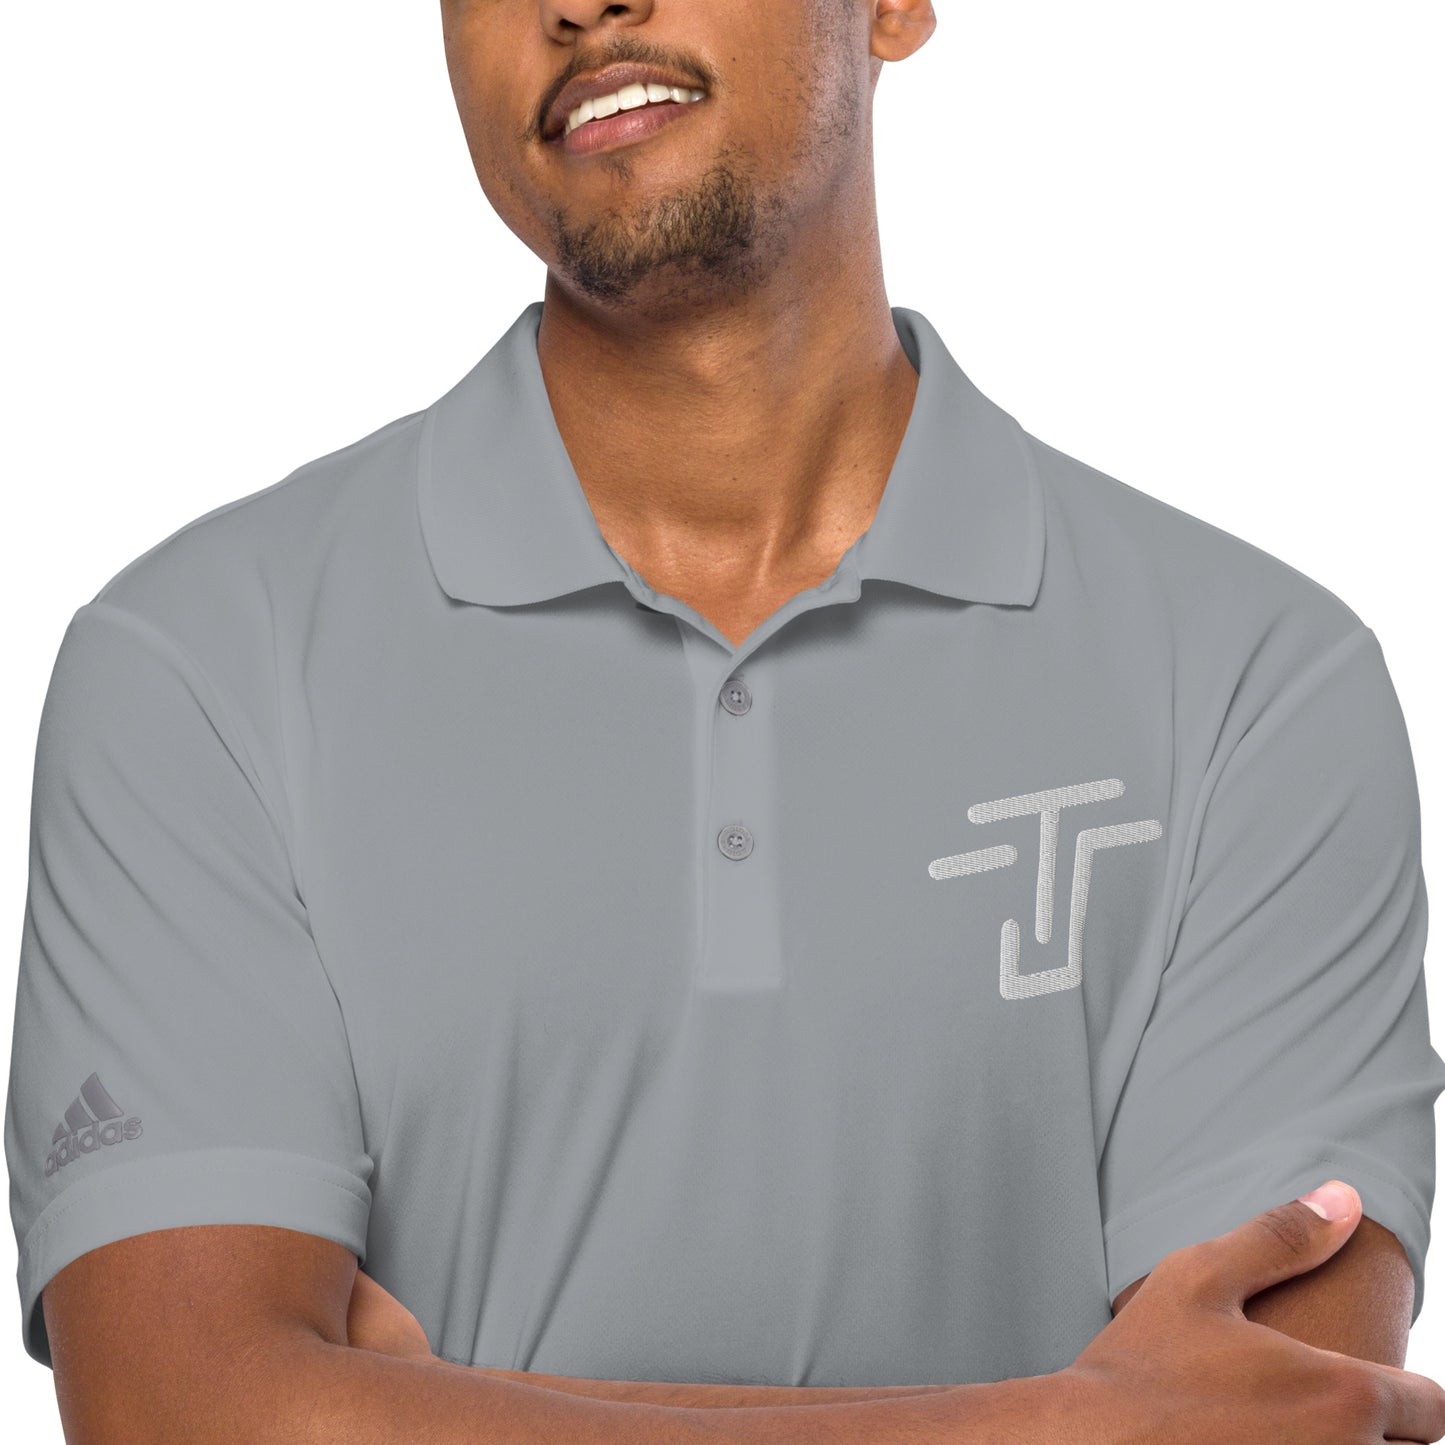 Jacko Brand Adidas Performance Polo Shirt